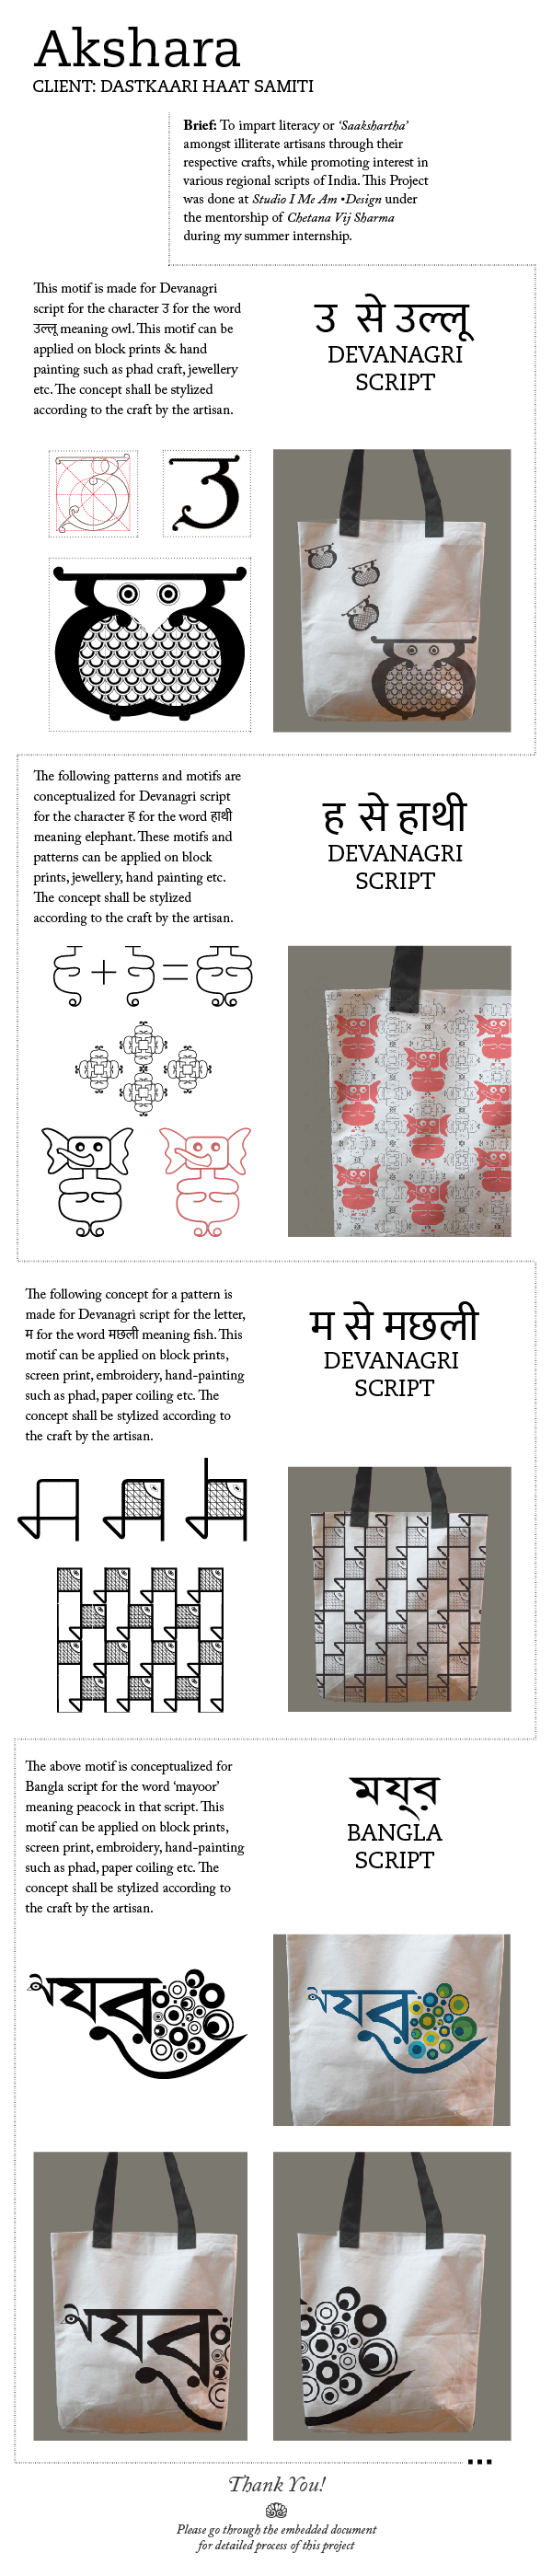 akshara devanagri bangla Scripts publication design